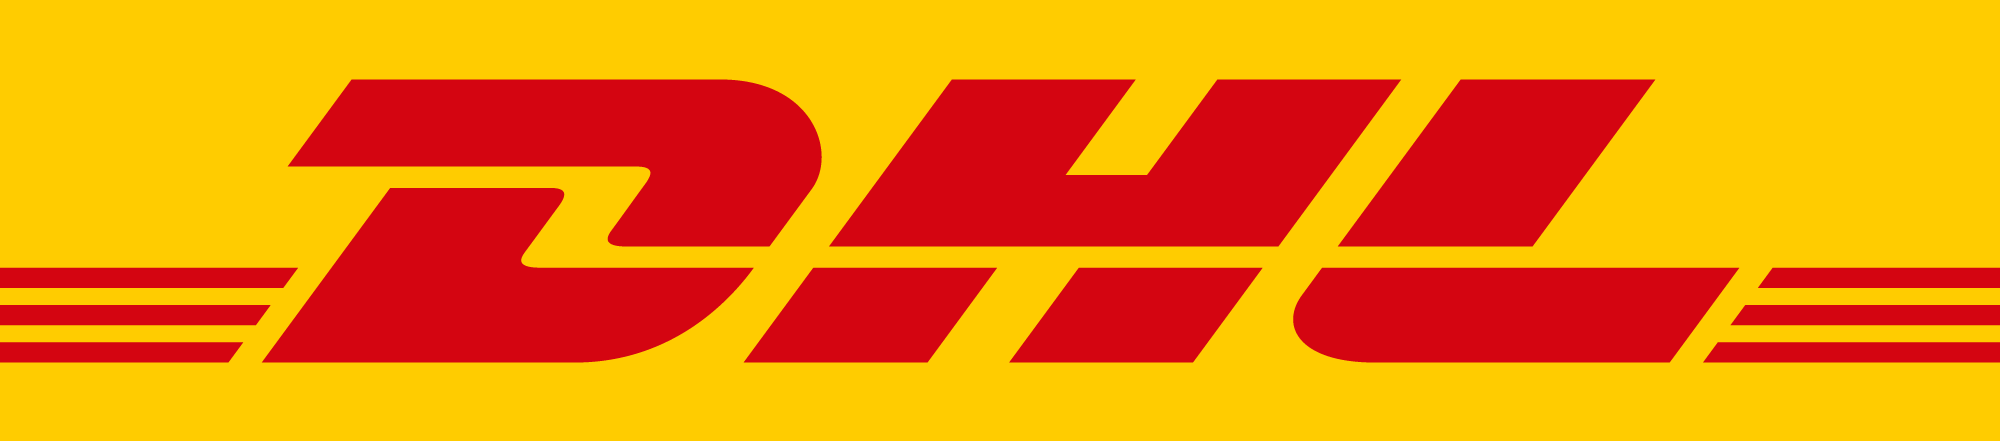 DHL-logotyp